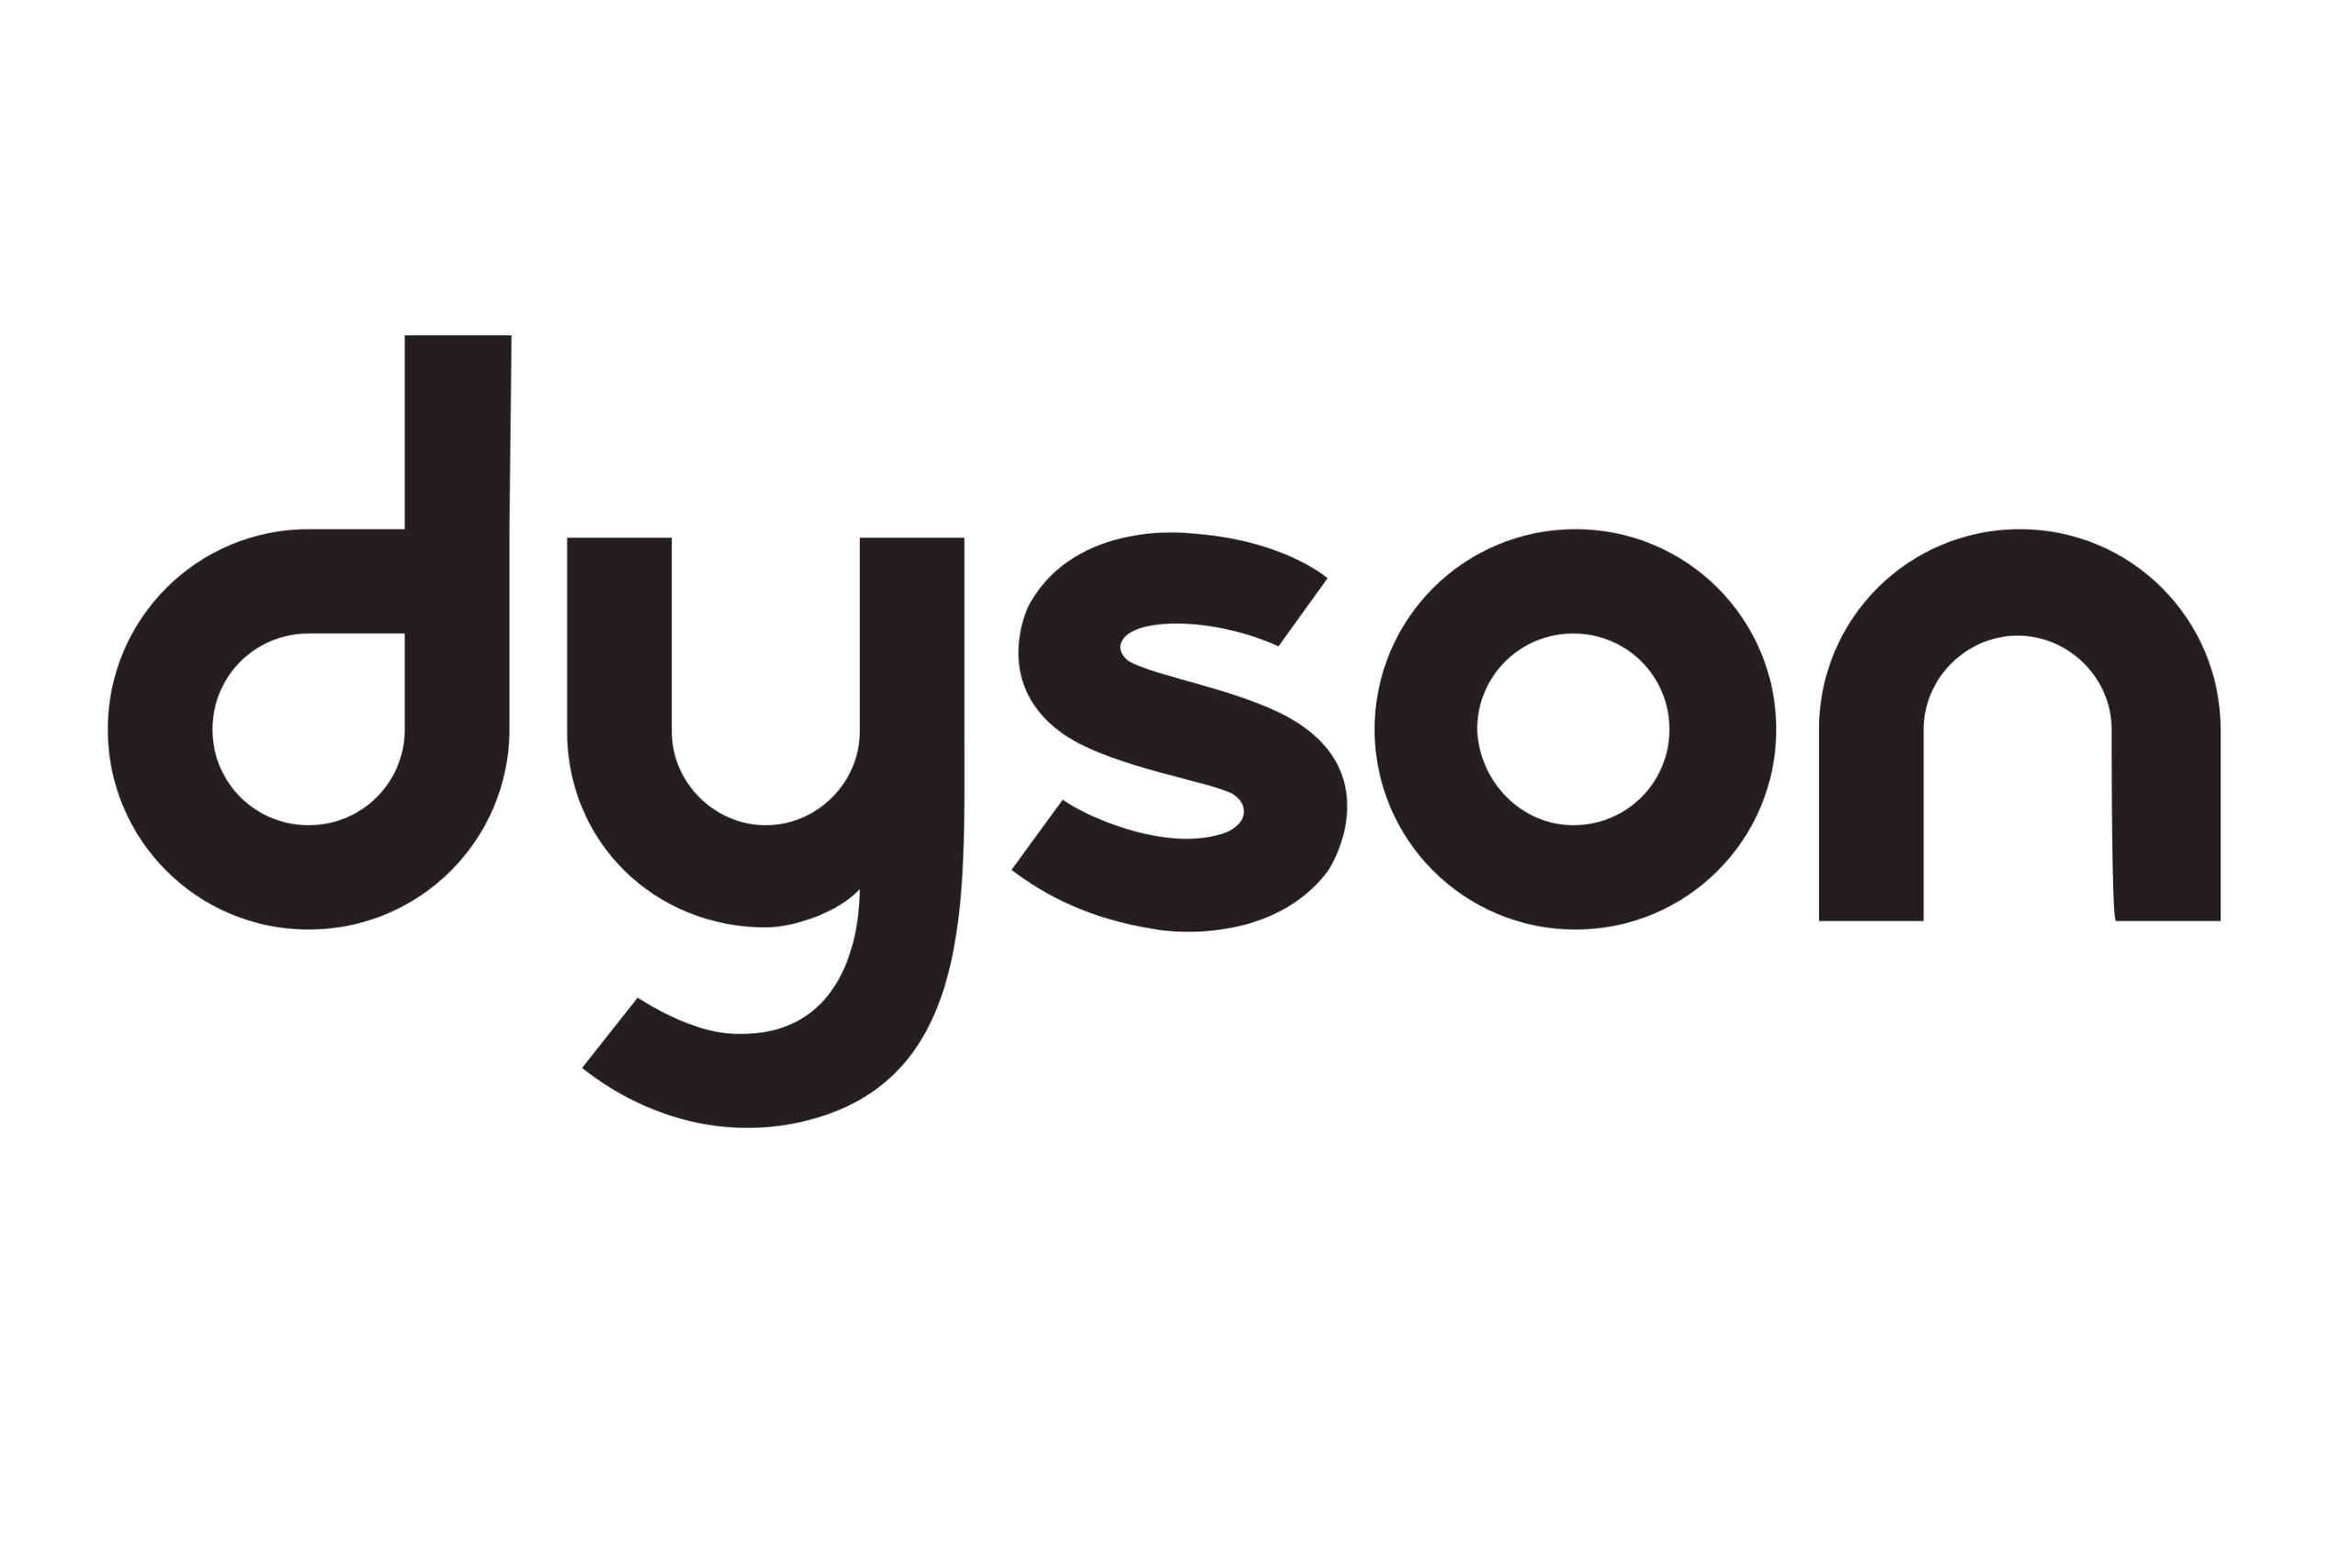 dyson-logo-2